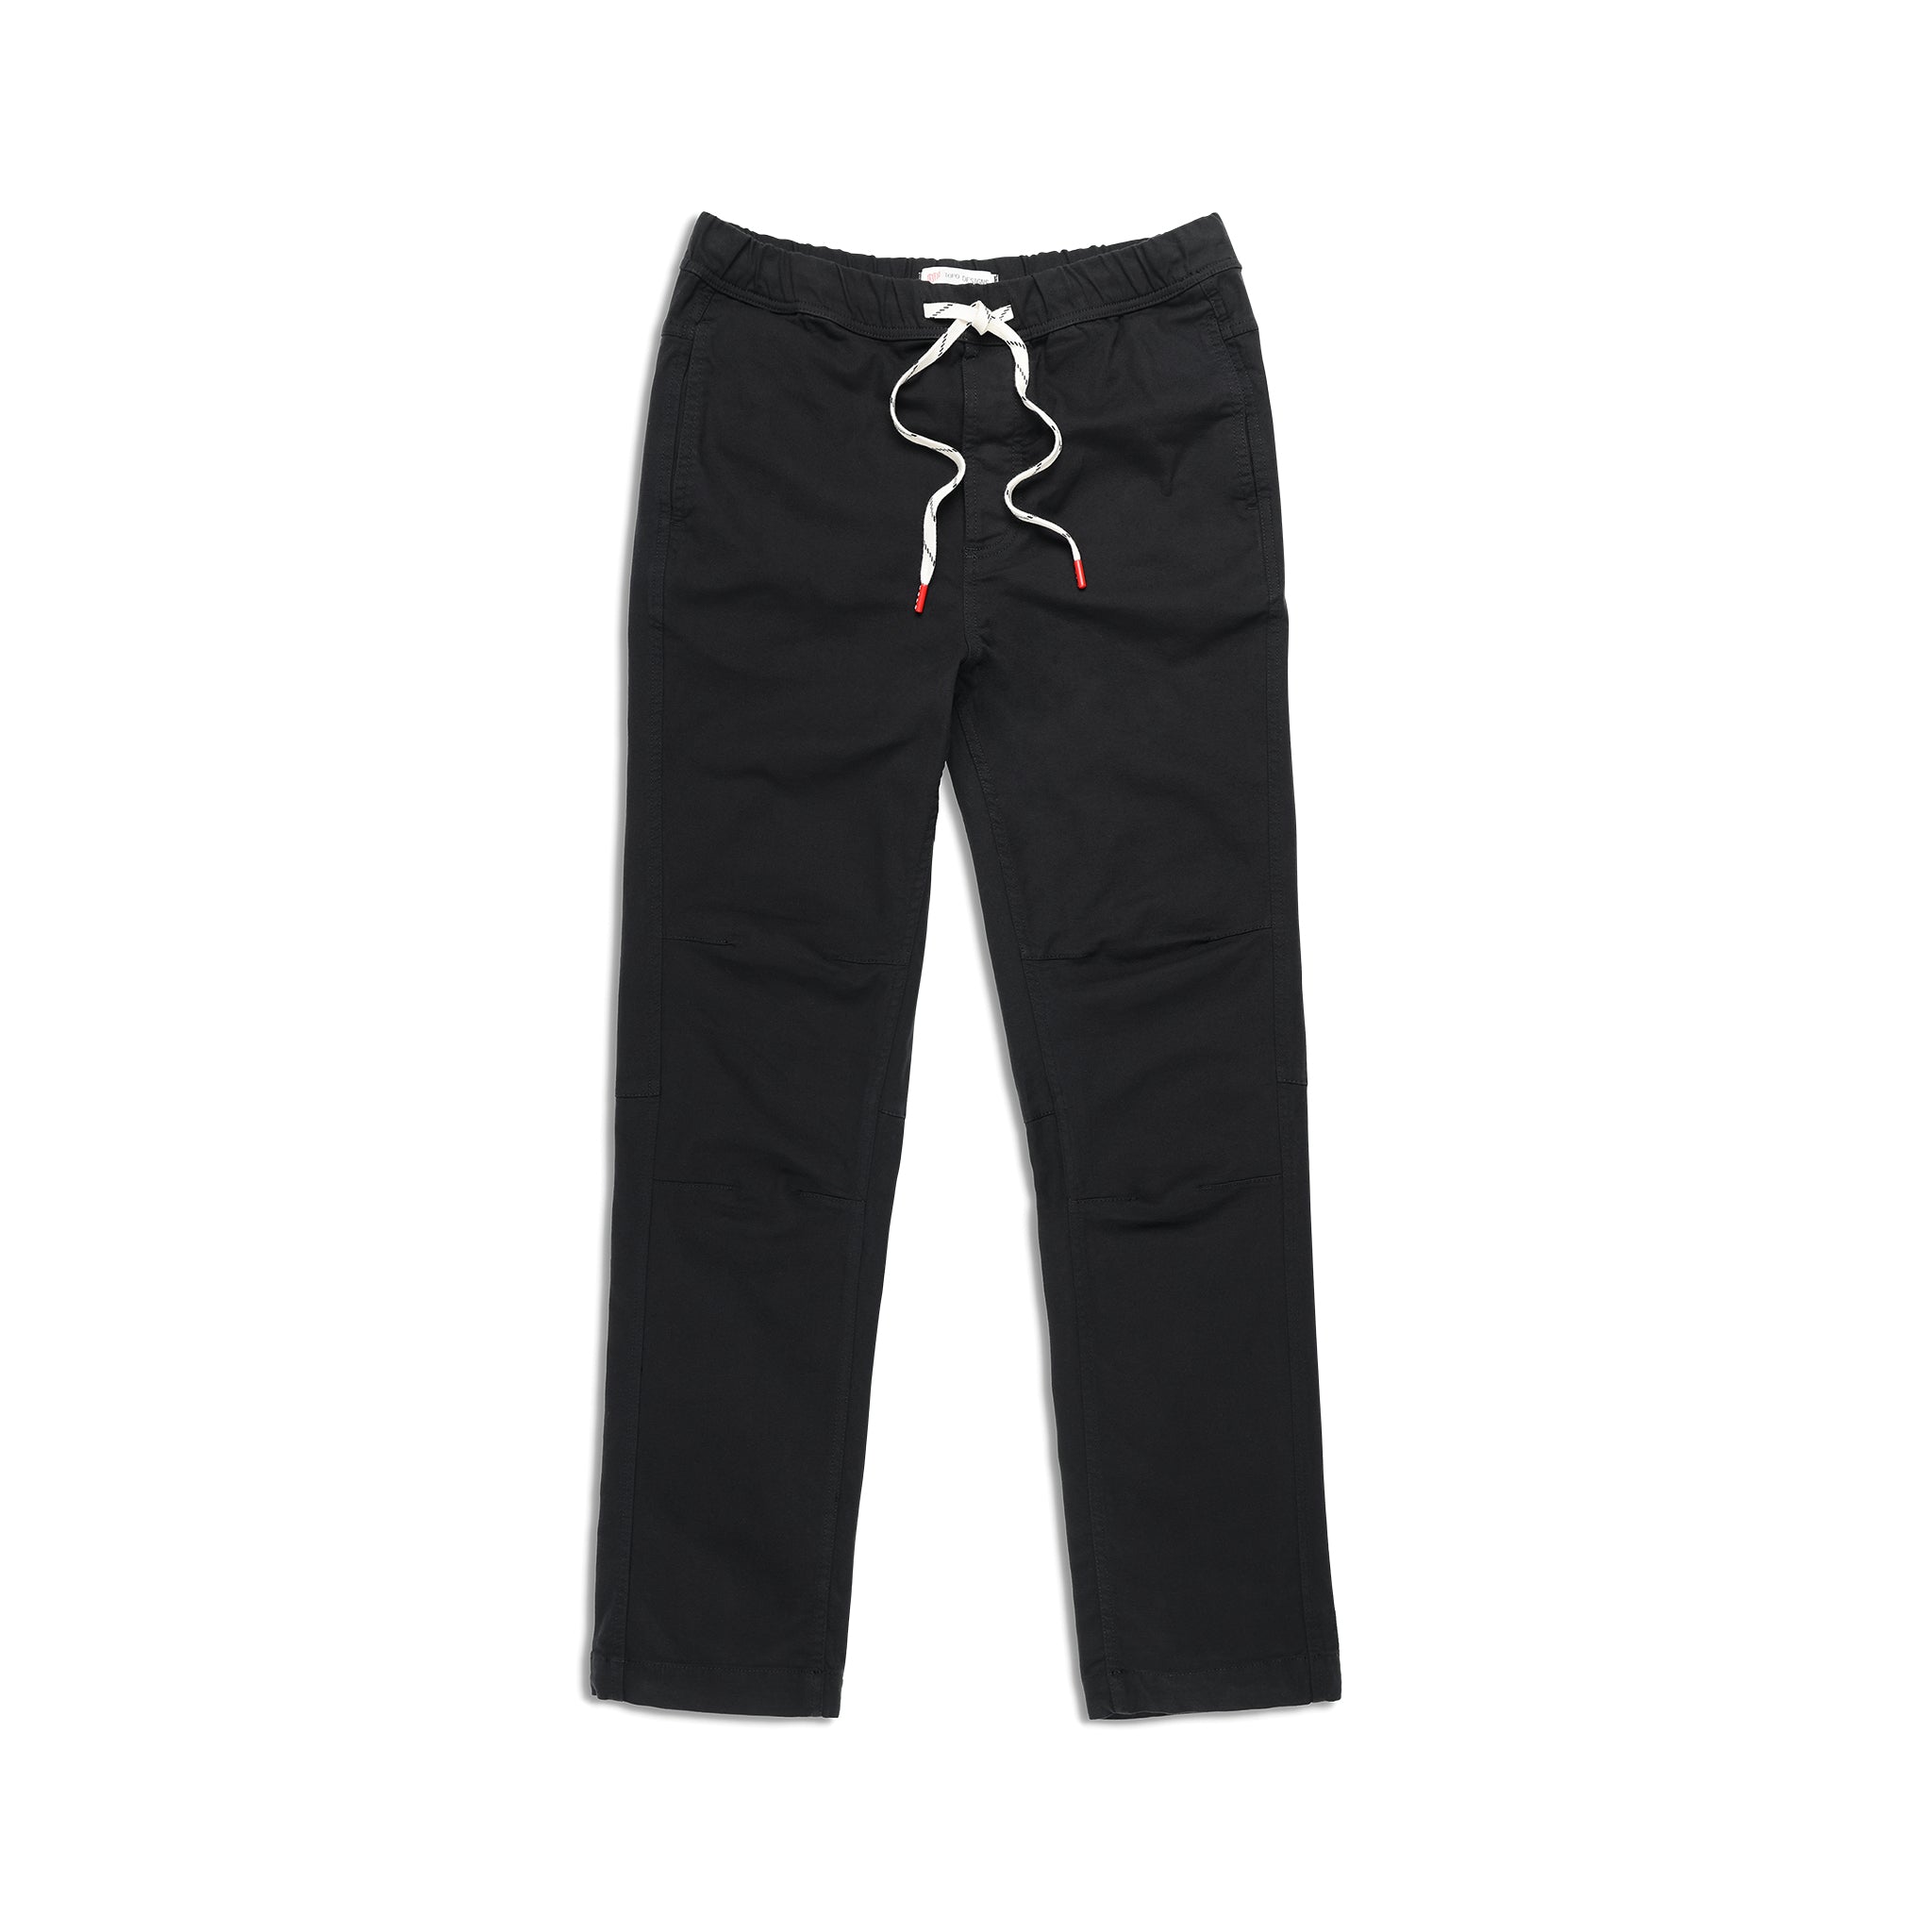 Front View of Topo Designs Dirt Pants Classic - Men's in "Black"